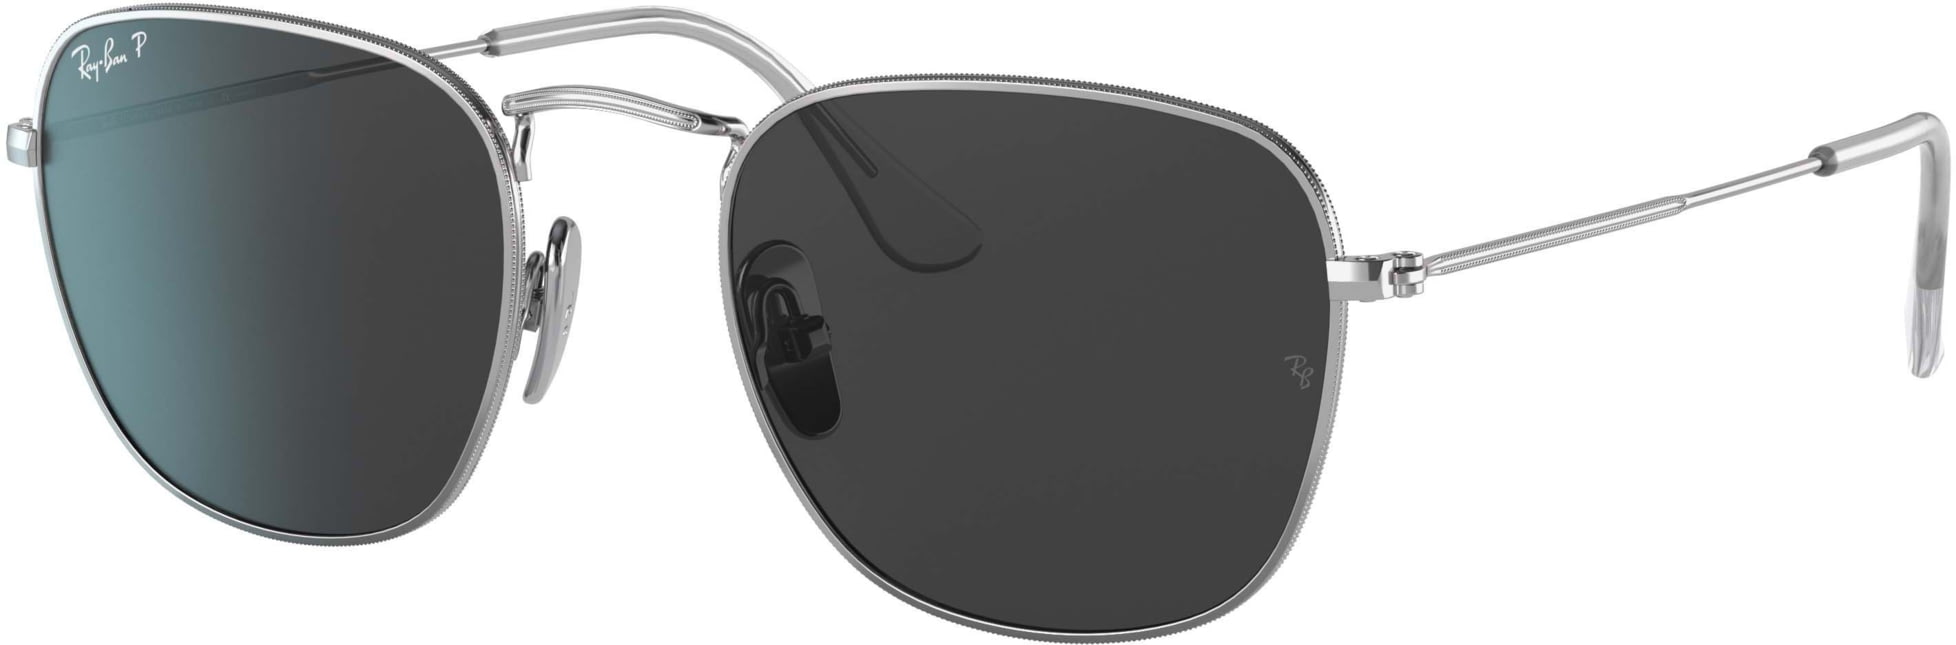 Ray-Ban Frank Titanium RB8157 Sunglasses | w/ Free S&H